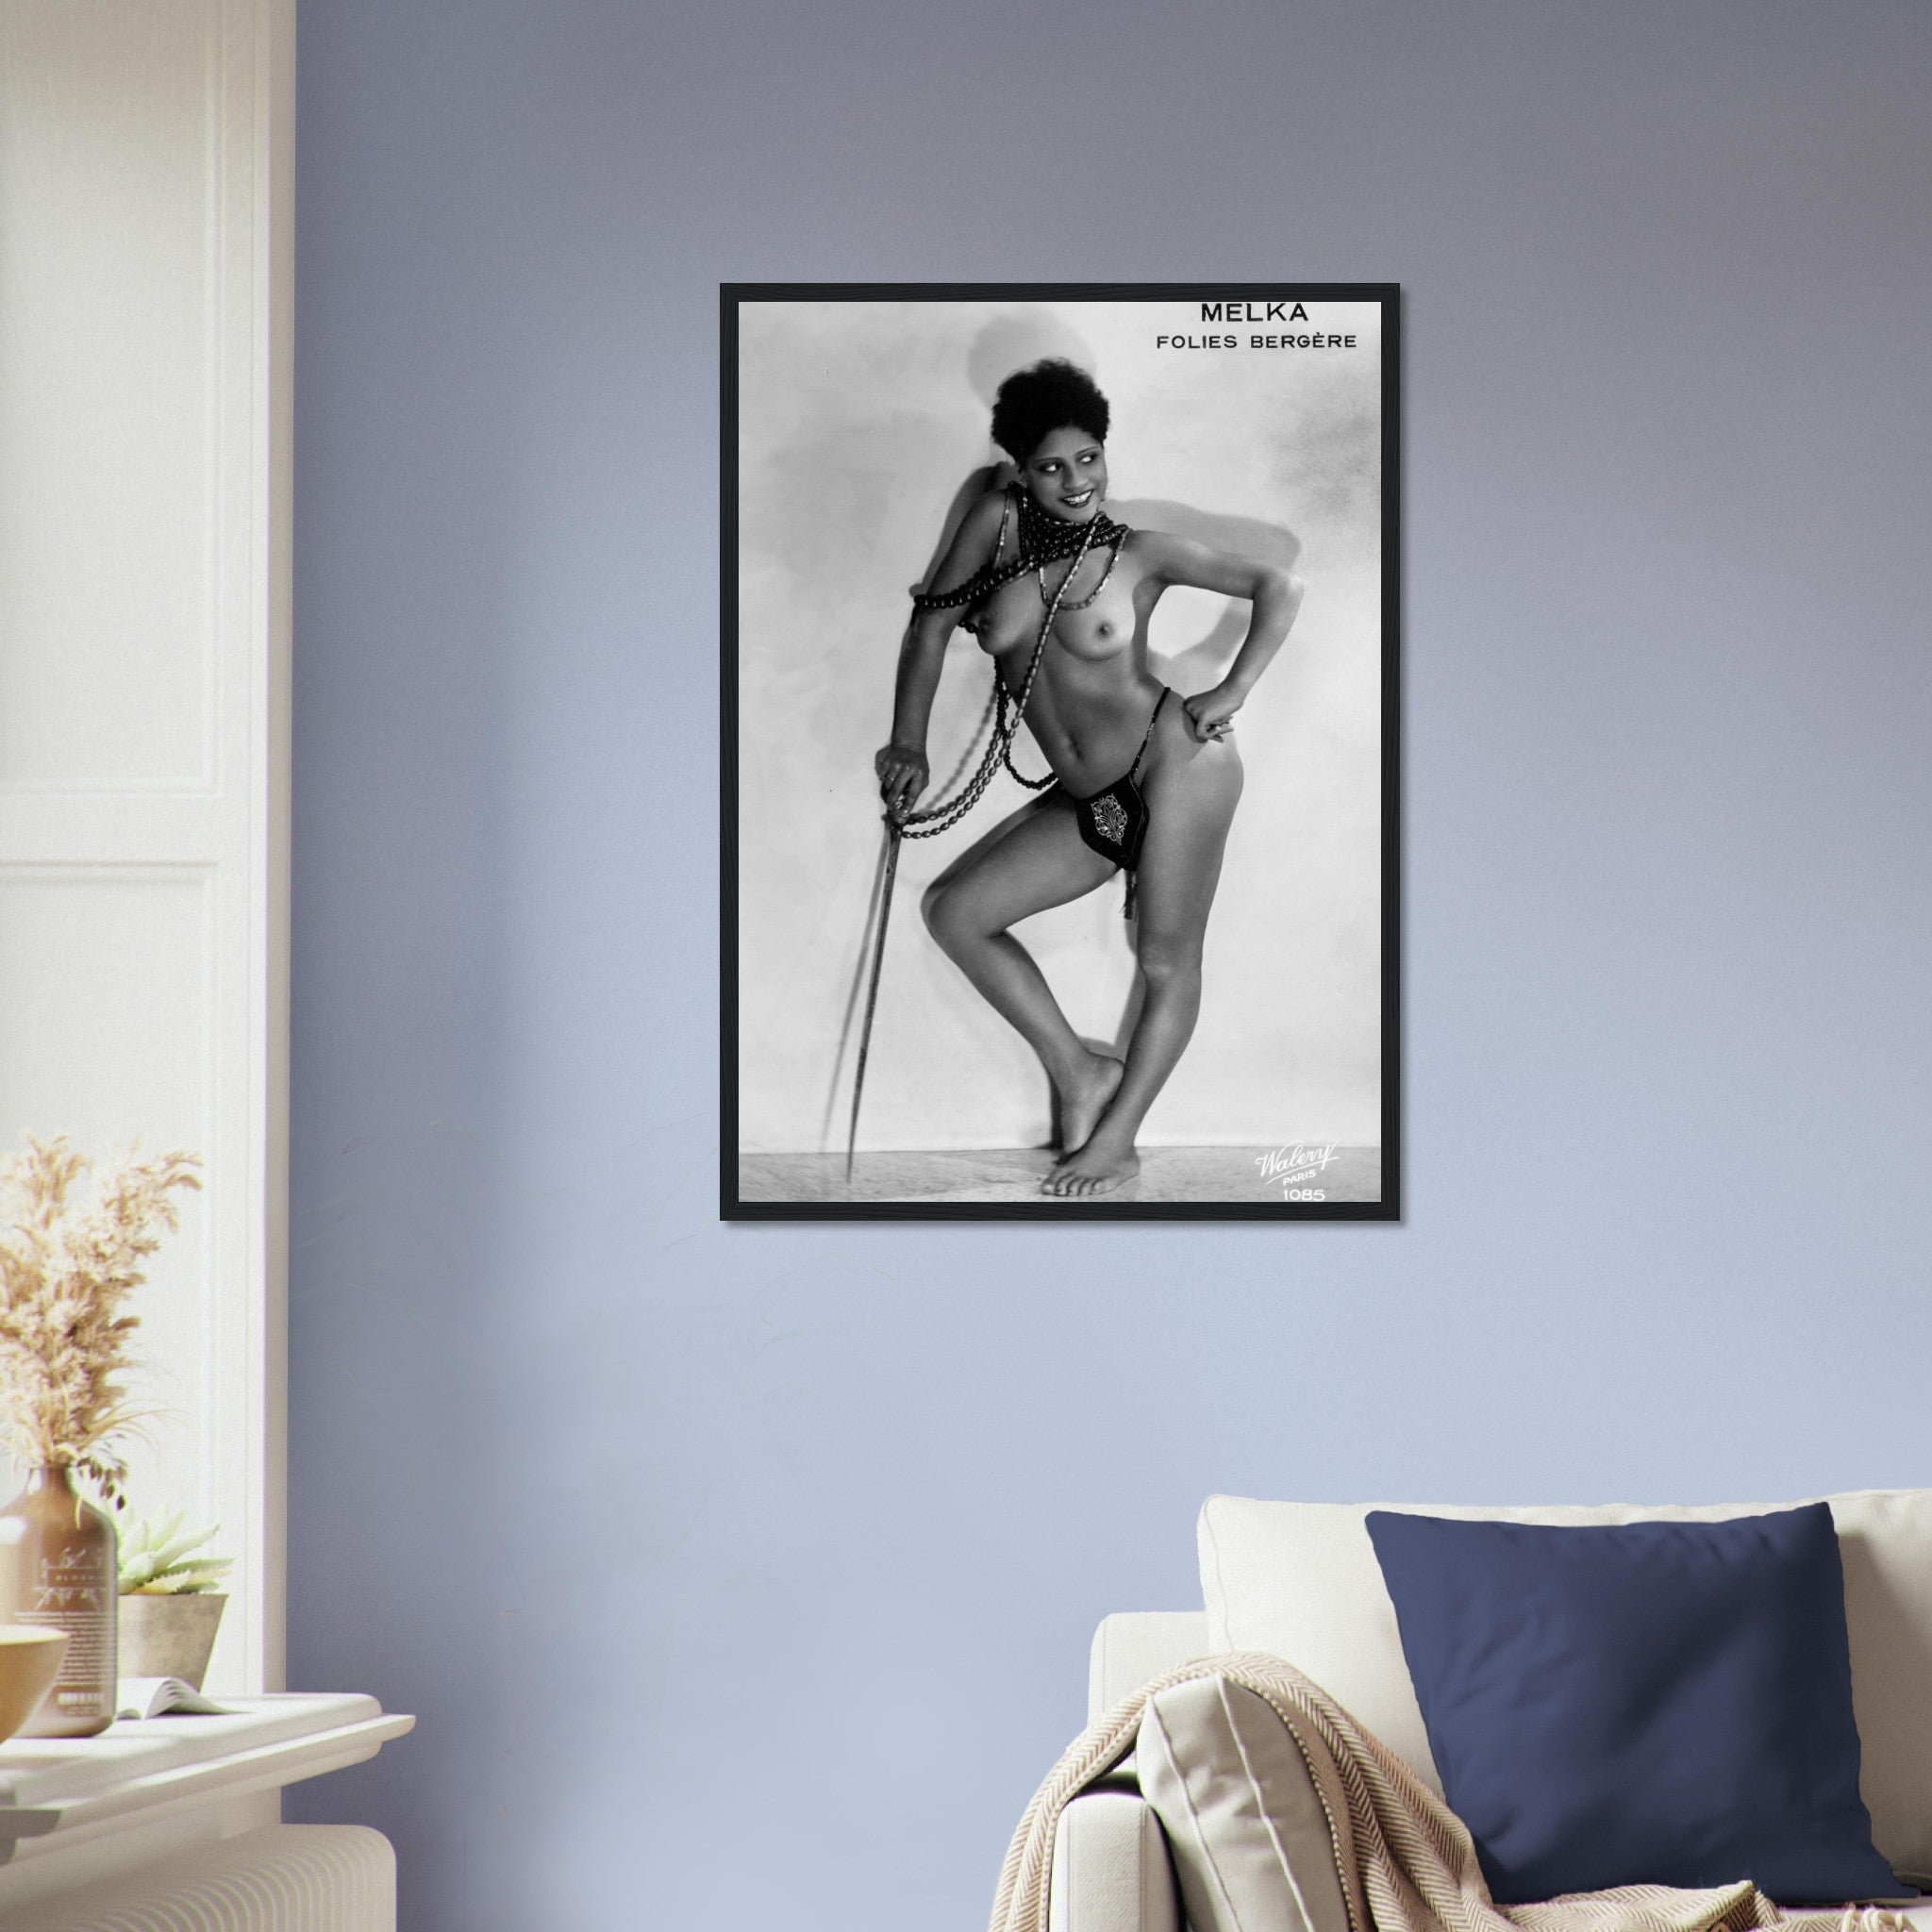 Melka Nude Folie Bergere Framed Topless Folie Bergere Black Woman Pin Up - WallArtPrints4U